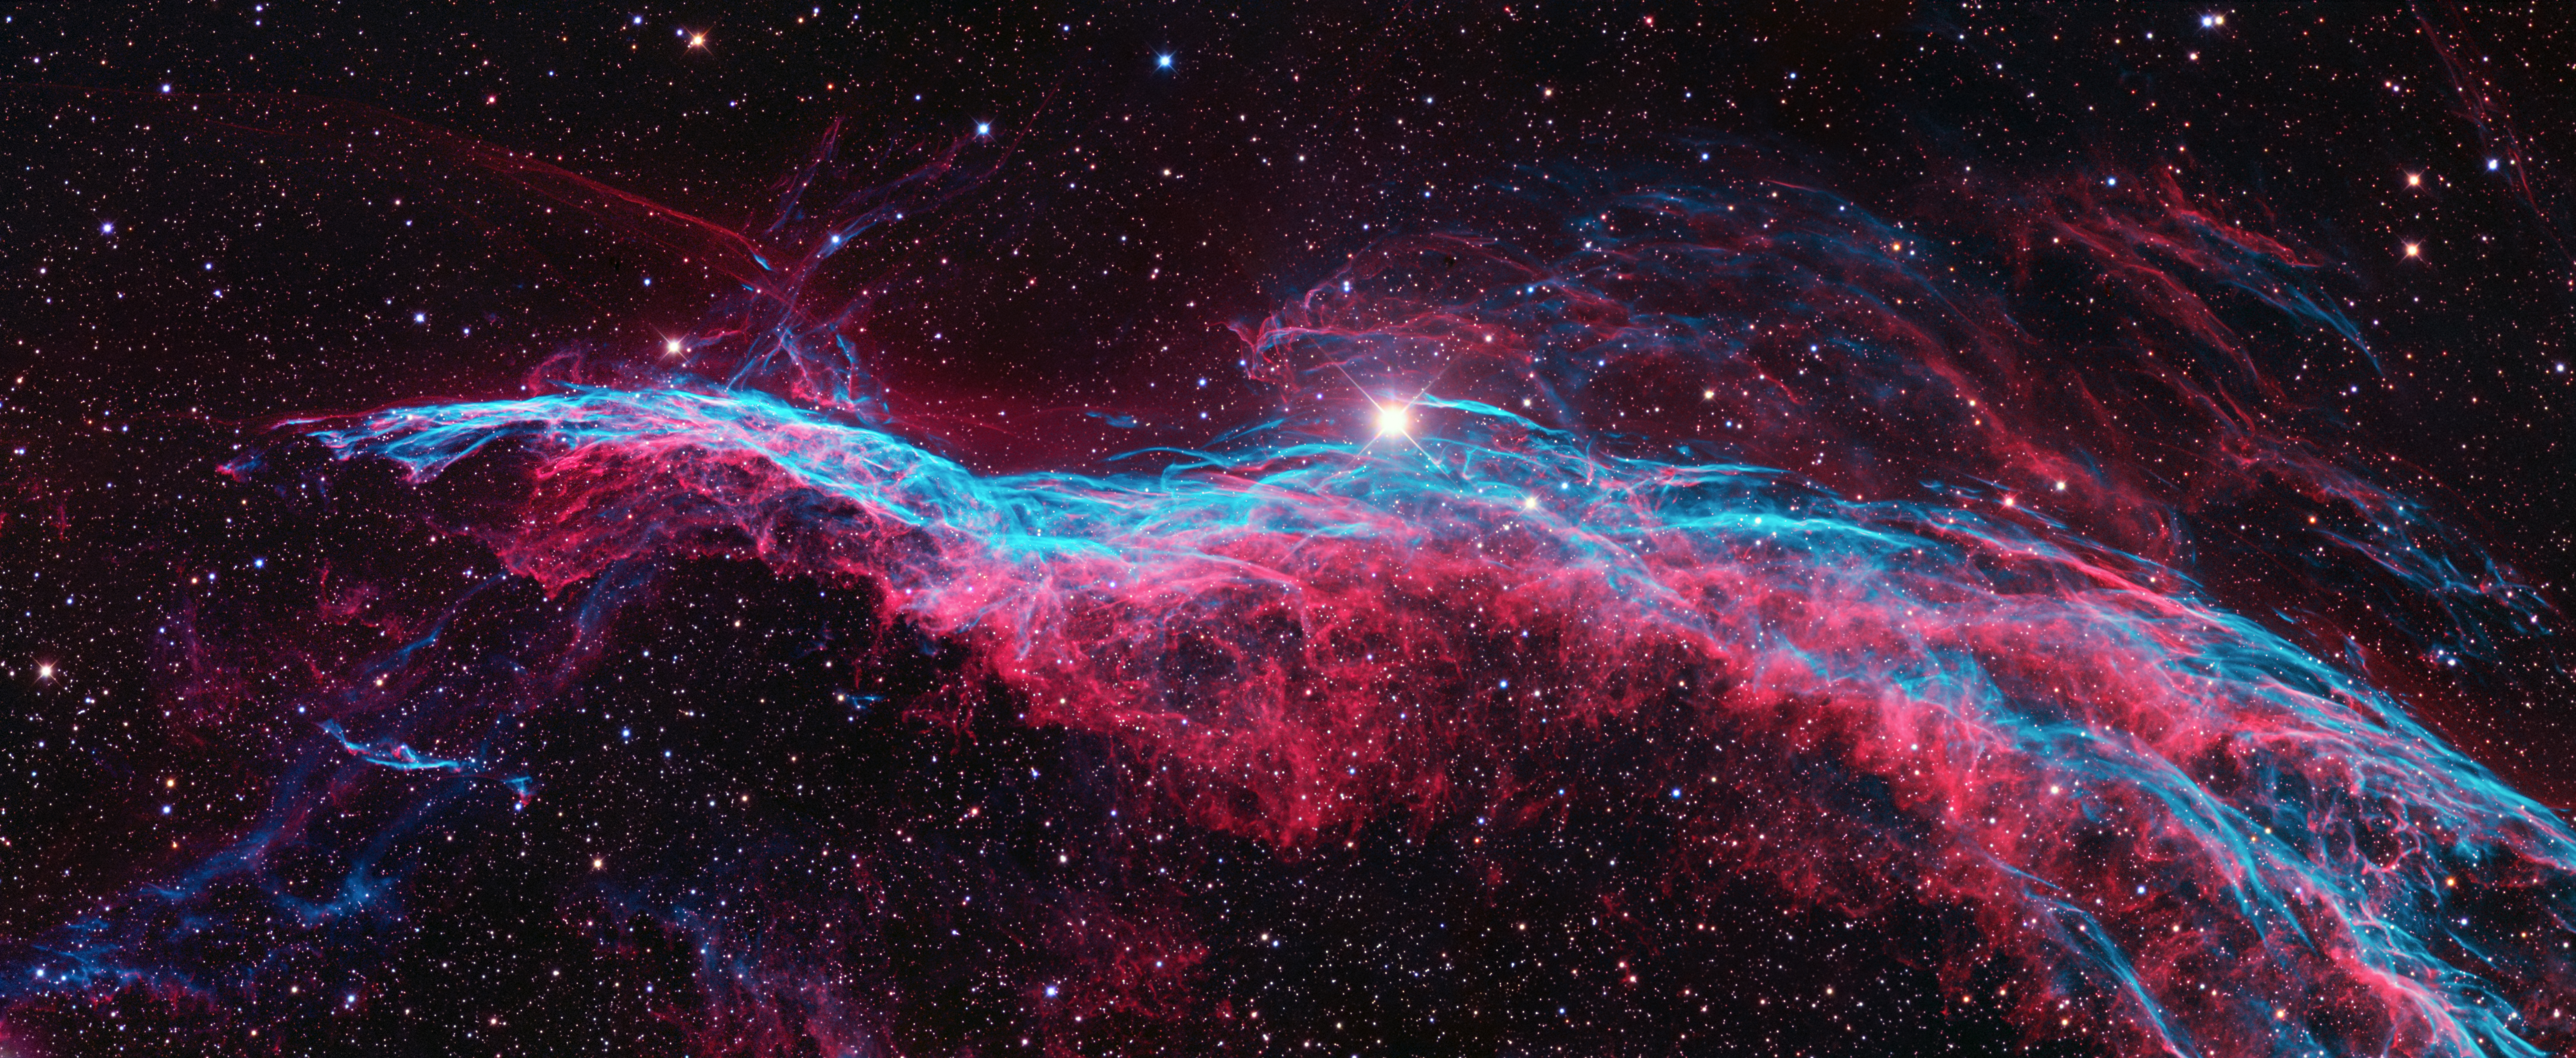 File Veil Nebula Ngc6960 Jpg Wikipedia The Encyclopedia